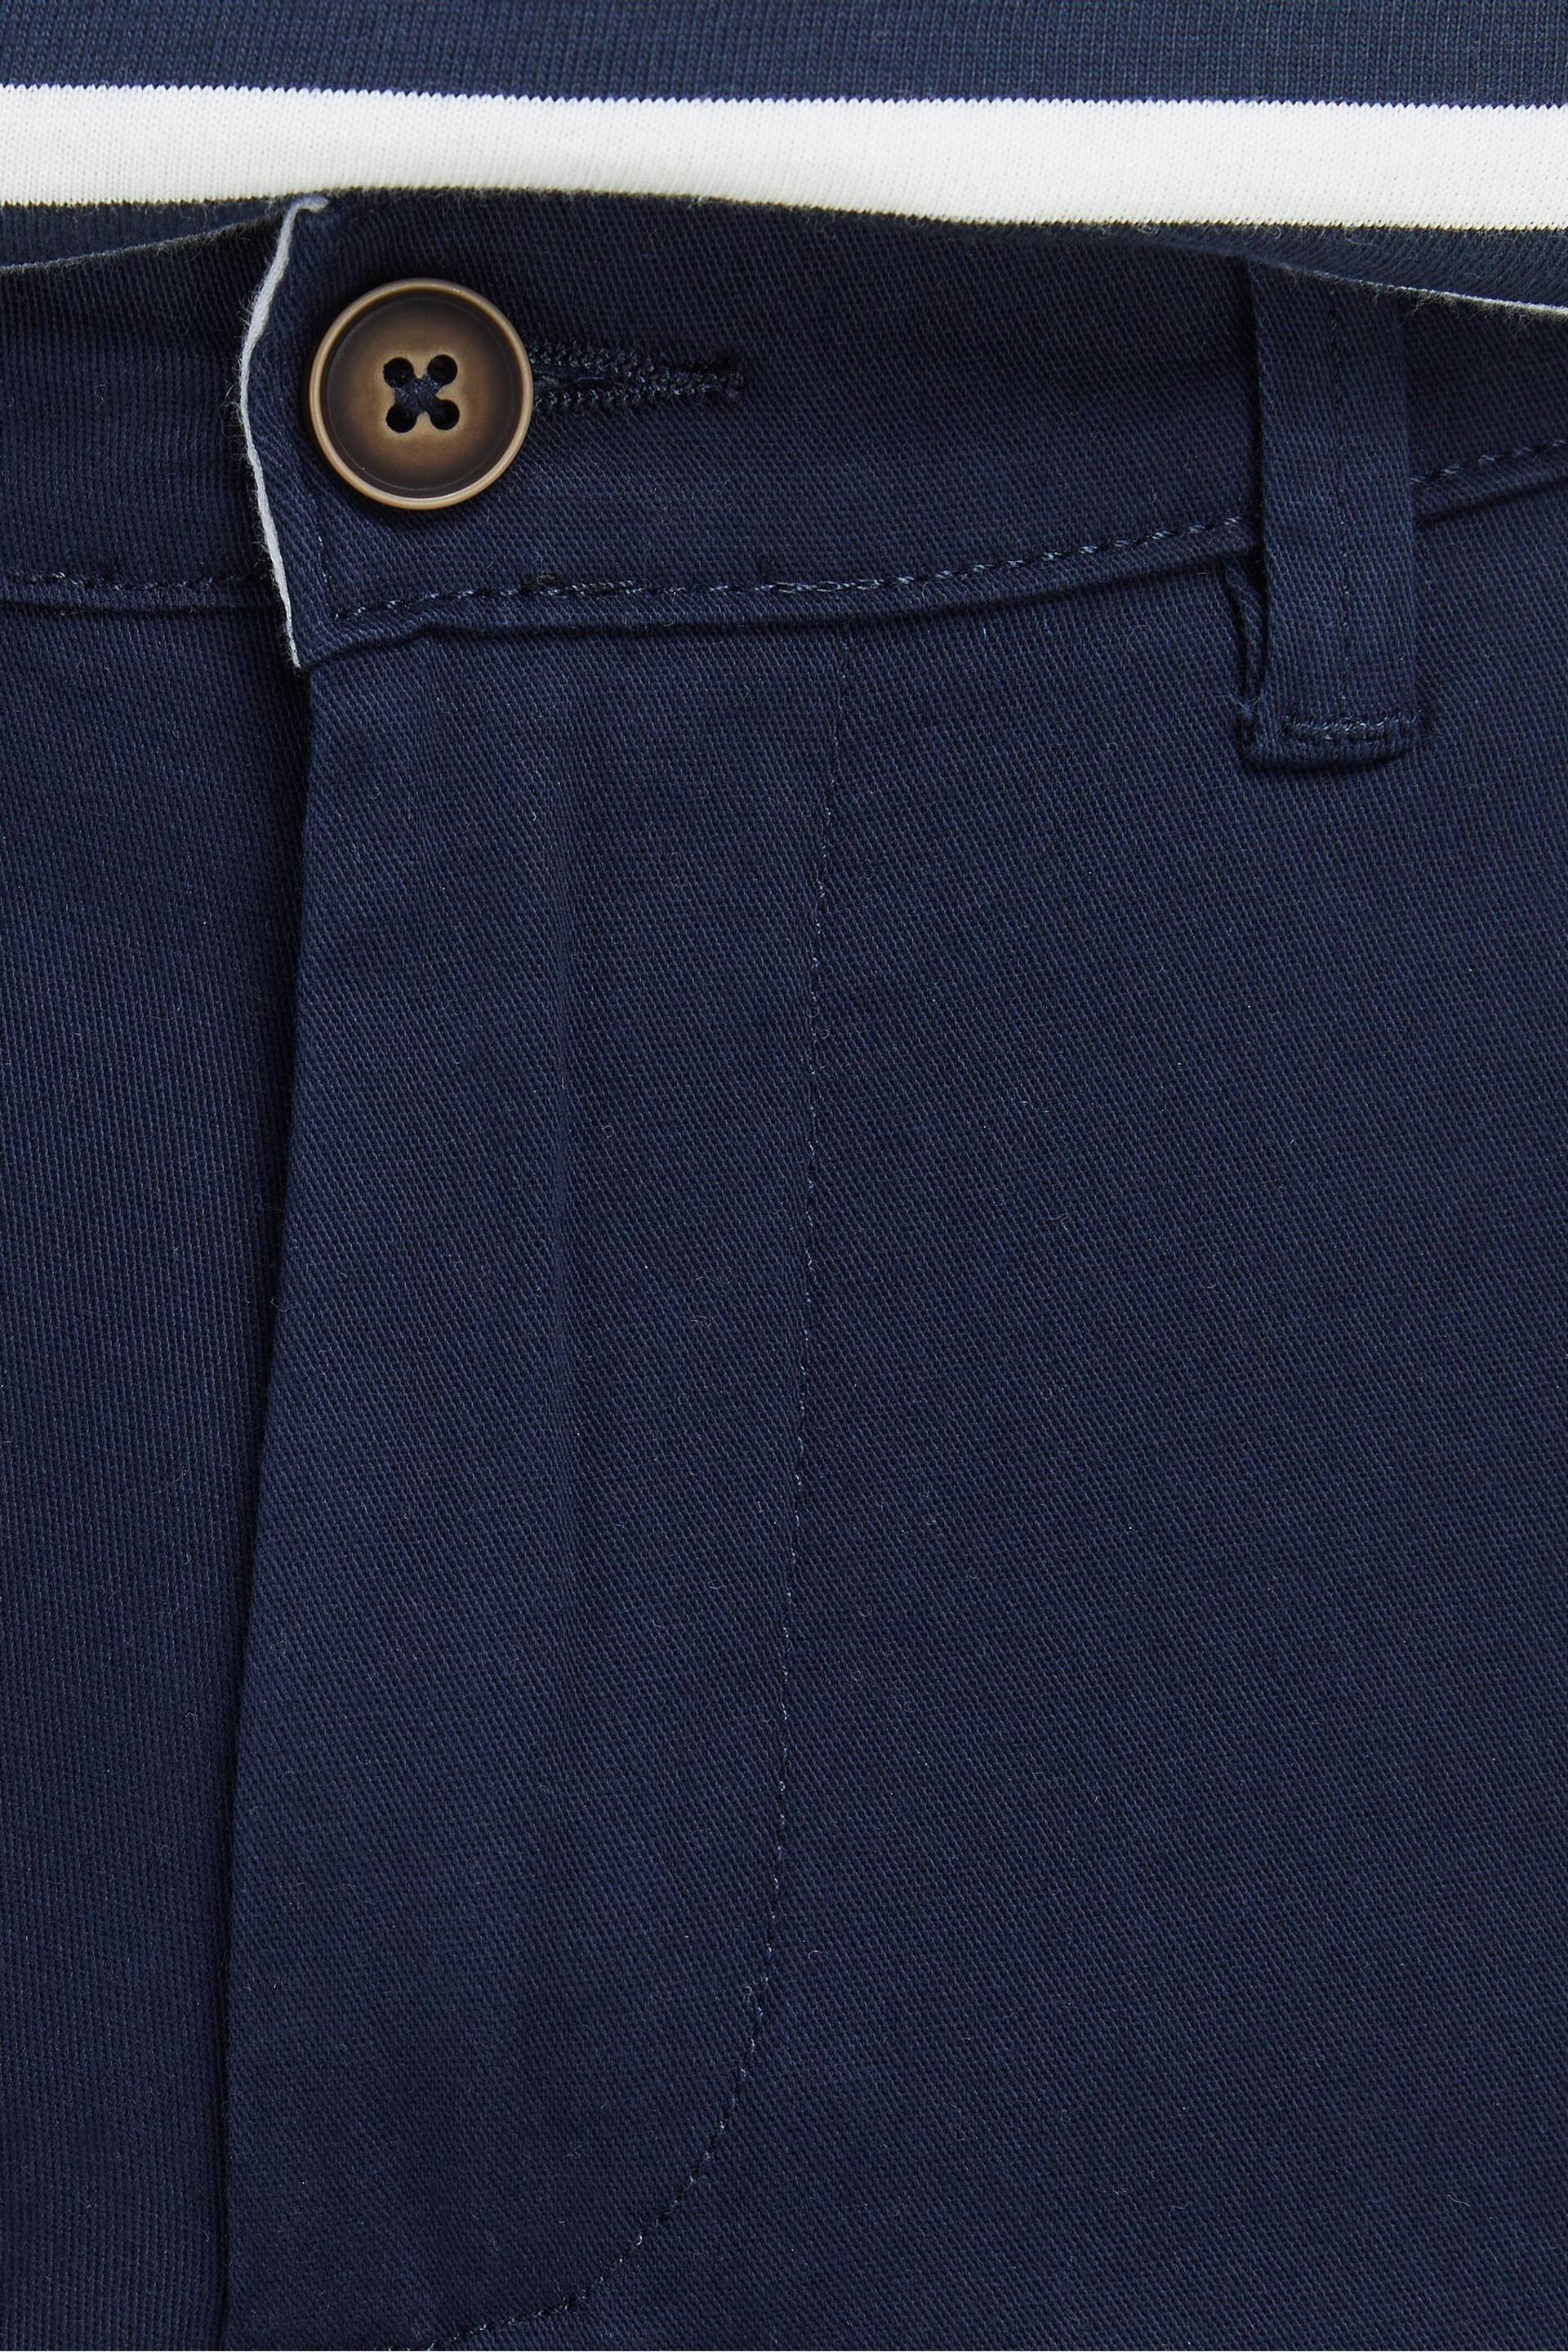 JACK & JONES Blue Slim Fit Chino Trousers - Image 7 of 8